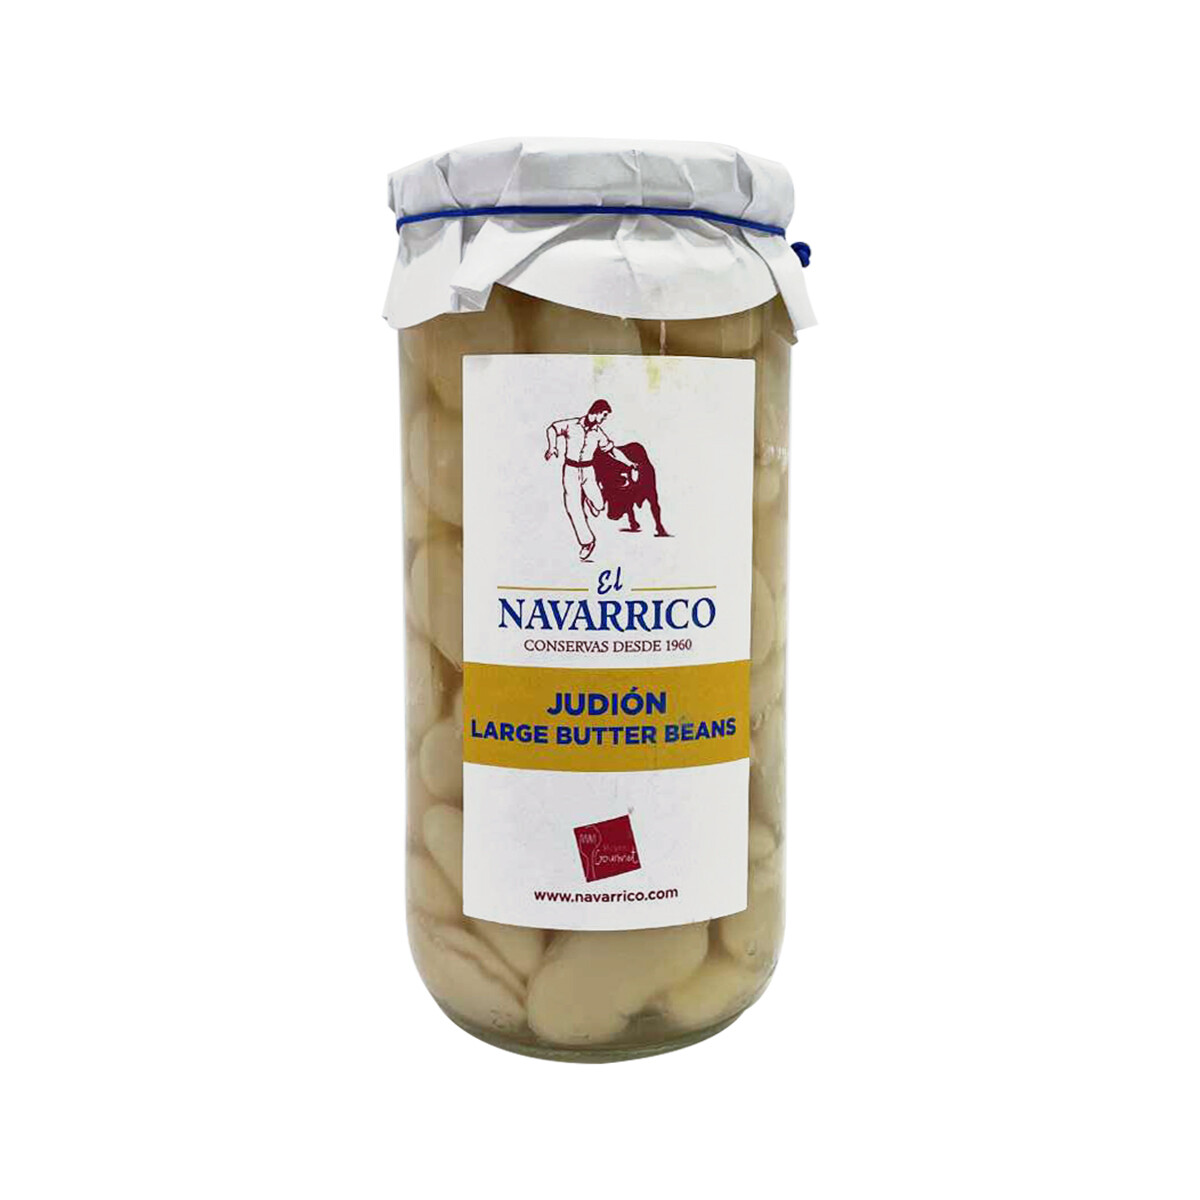 El Navarrico Judion Large Butter Beans 700g